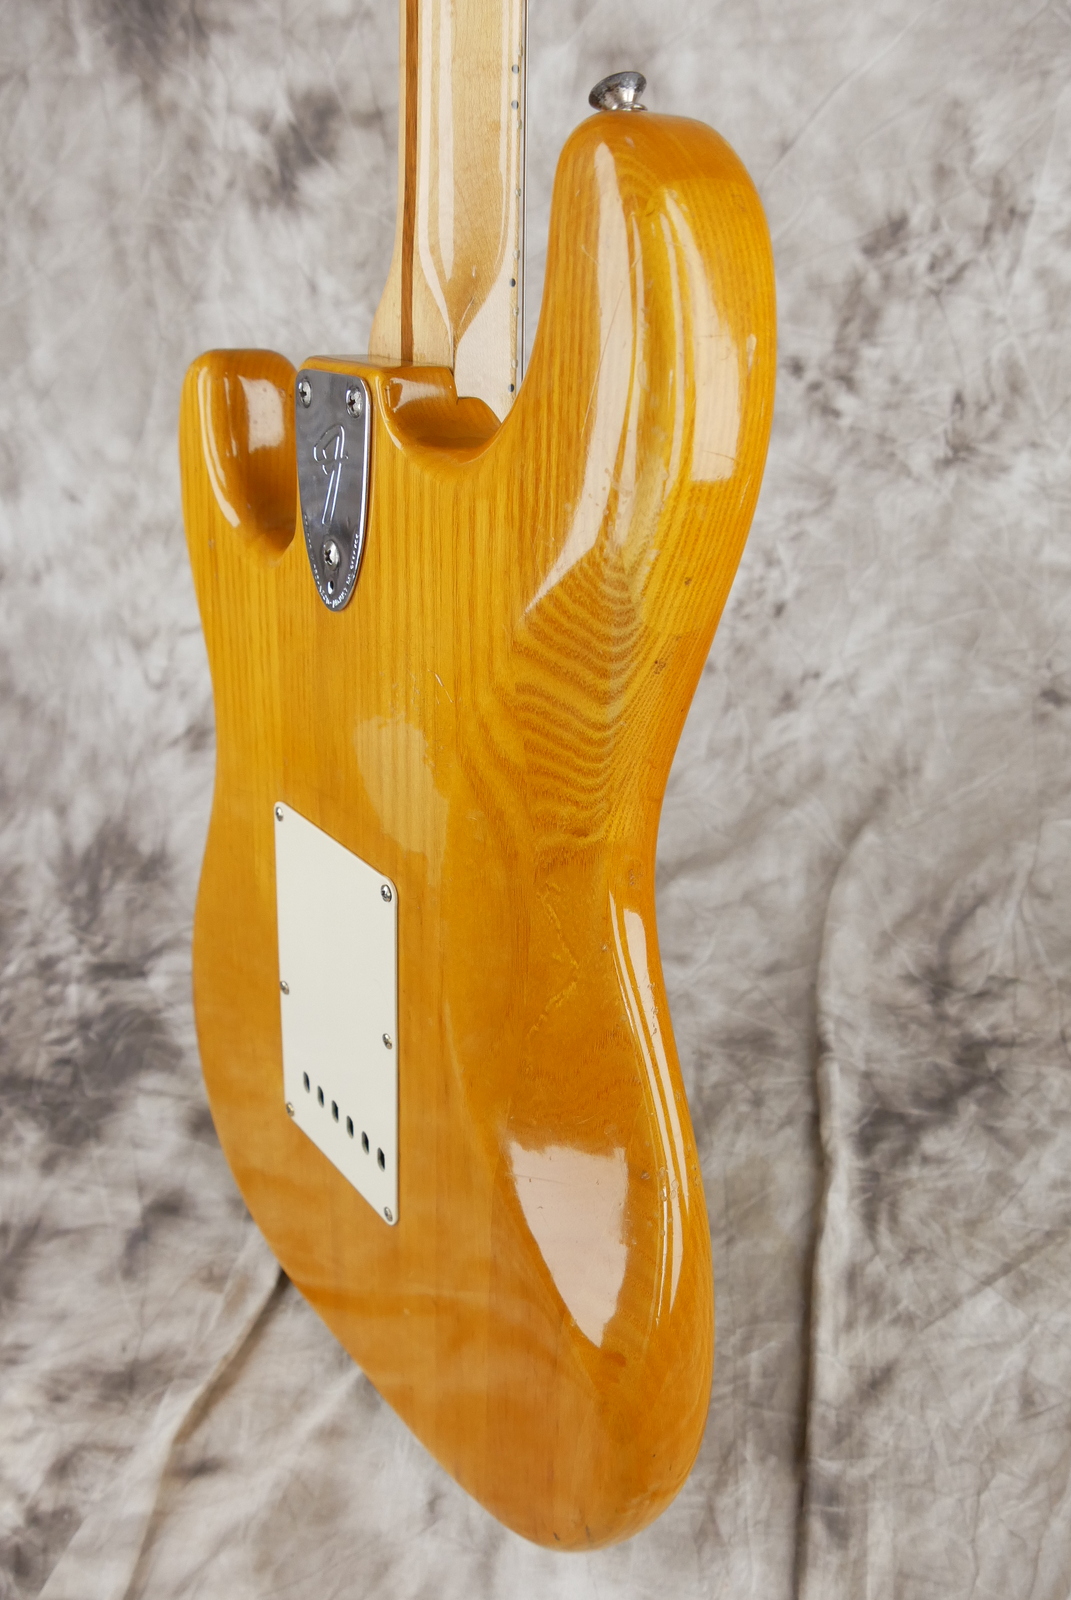 Fender_Stratocaster_10_piece_body_natural_USA_1977-008.JPG